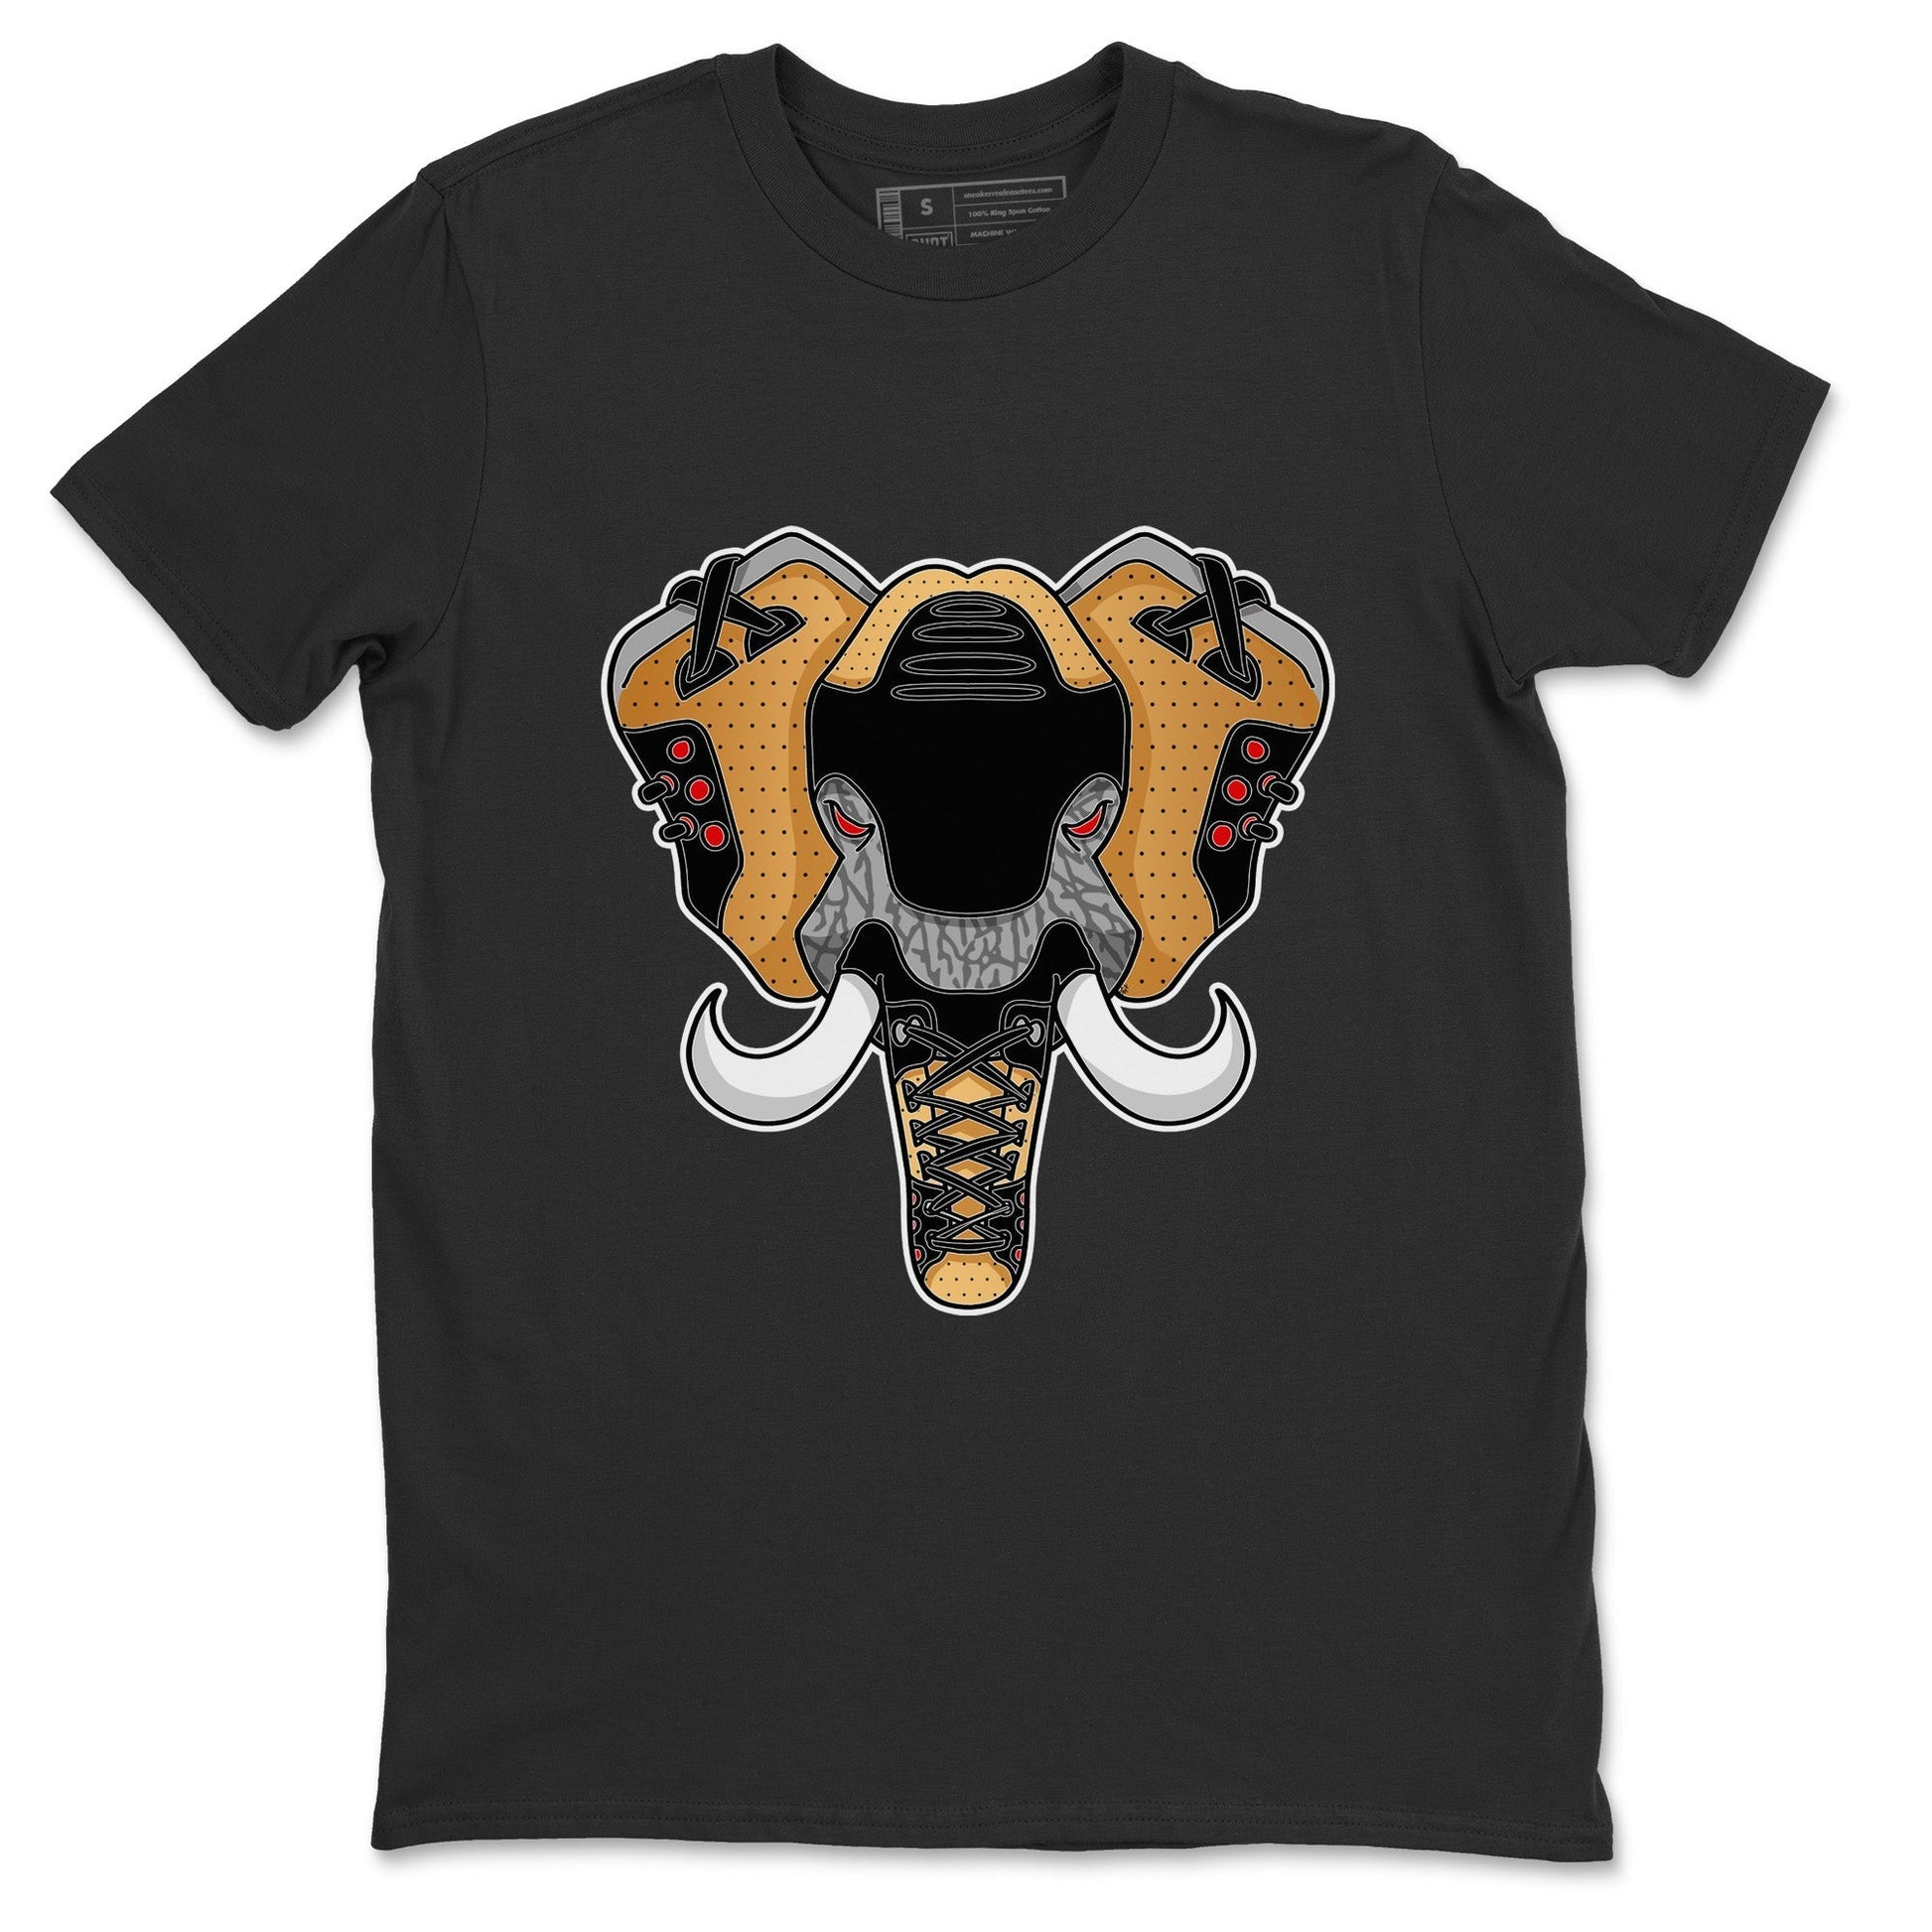 Jordan 3 Black Gold Sneaker Match Tees Elephant Symbol Sneaker Tees Jordan 3 Black Gold Sneaker Release Tees Unisex Shirts